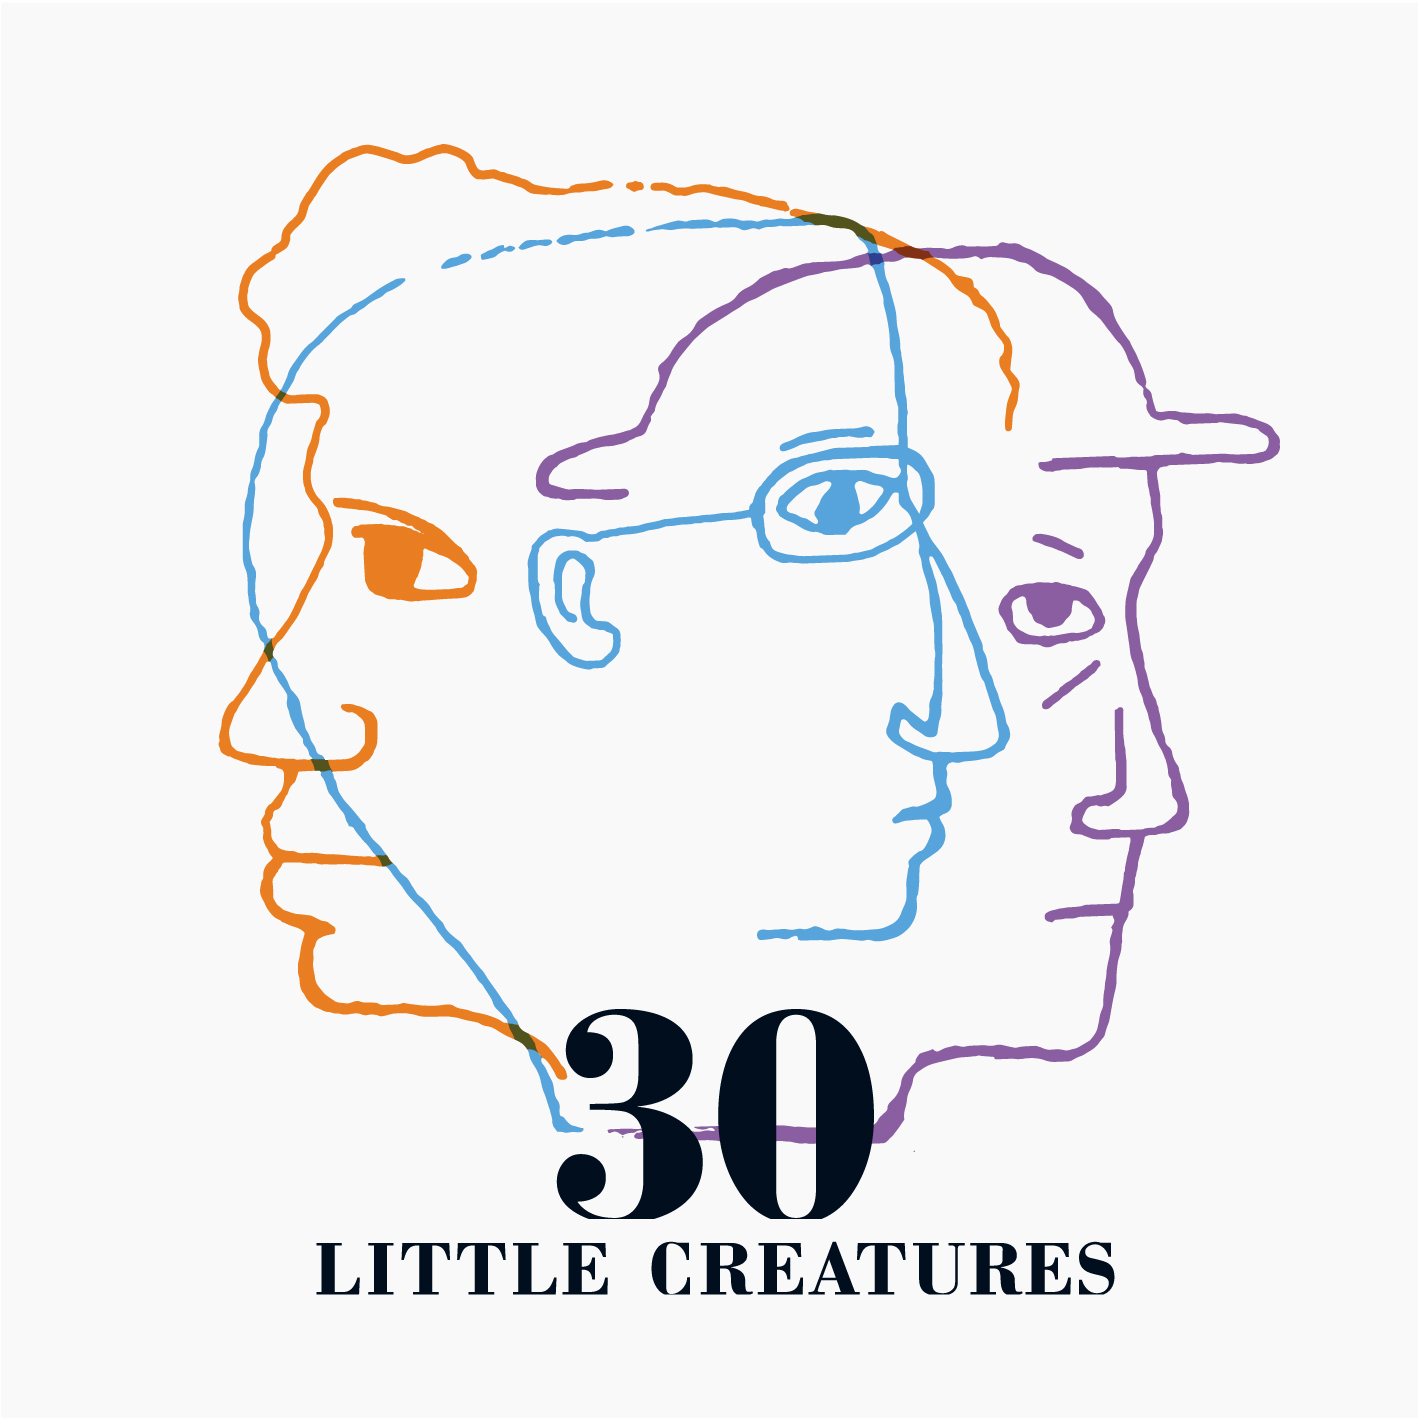 LITTLE CREATURES『30』